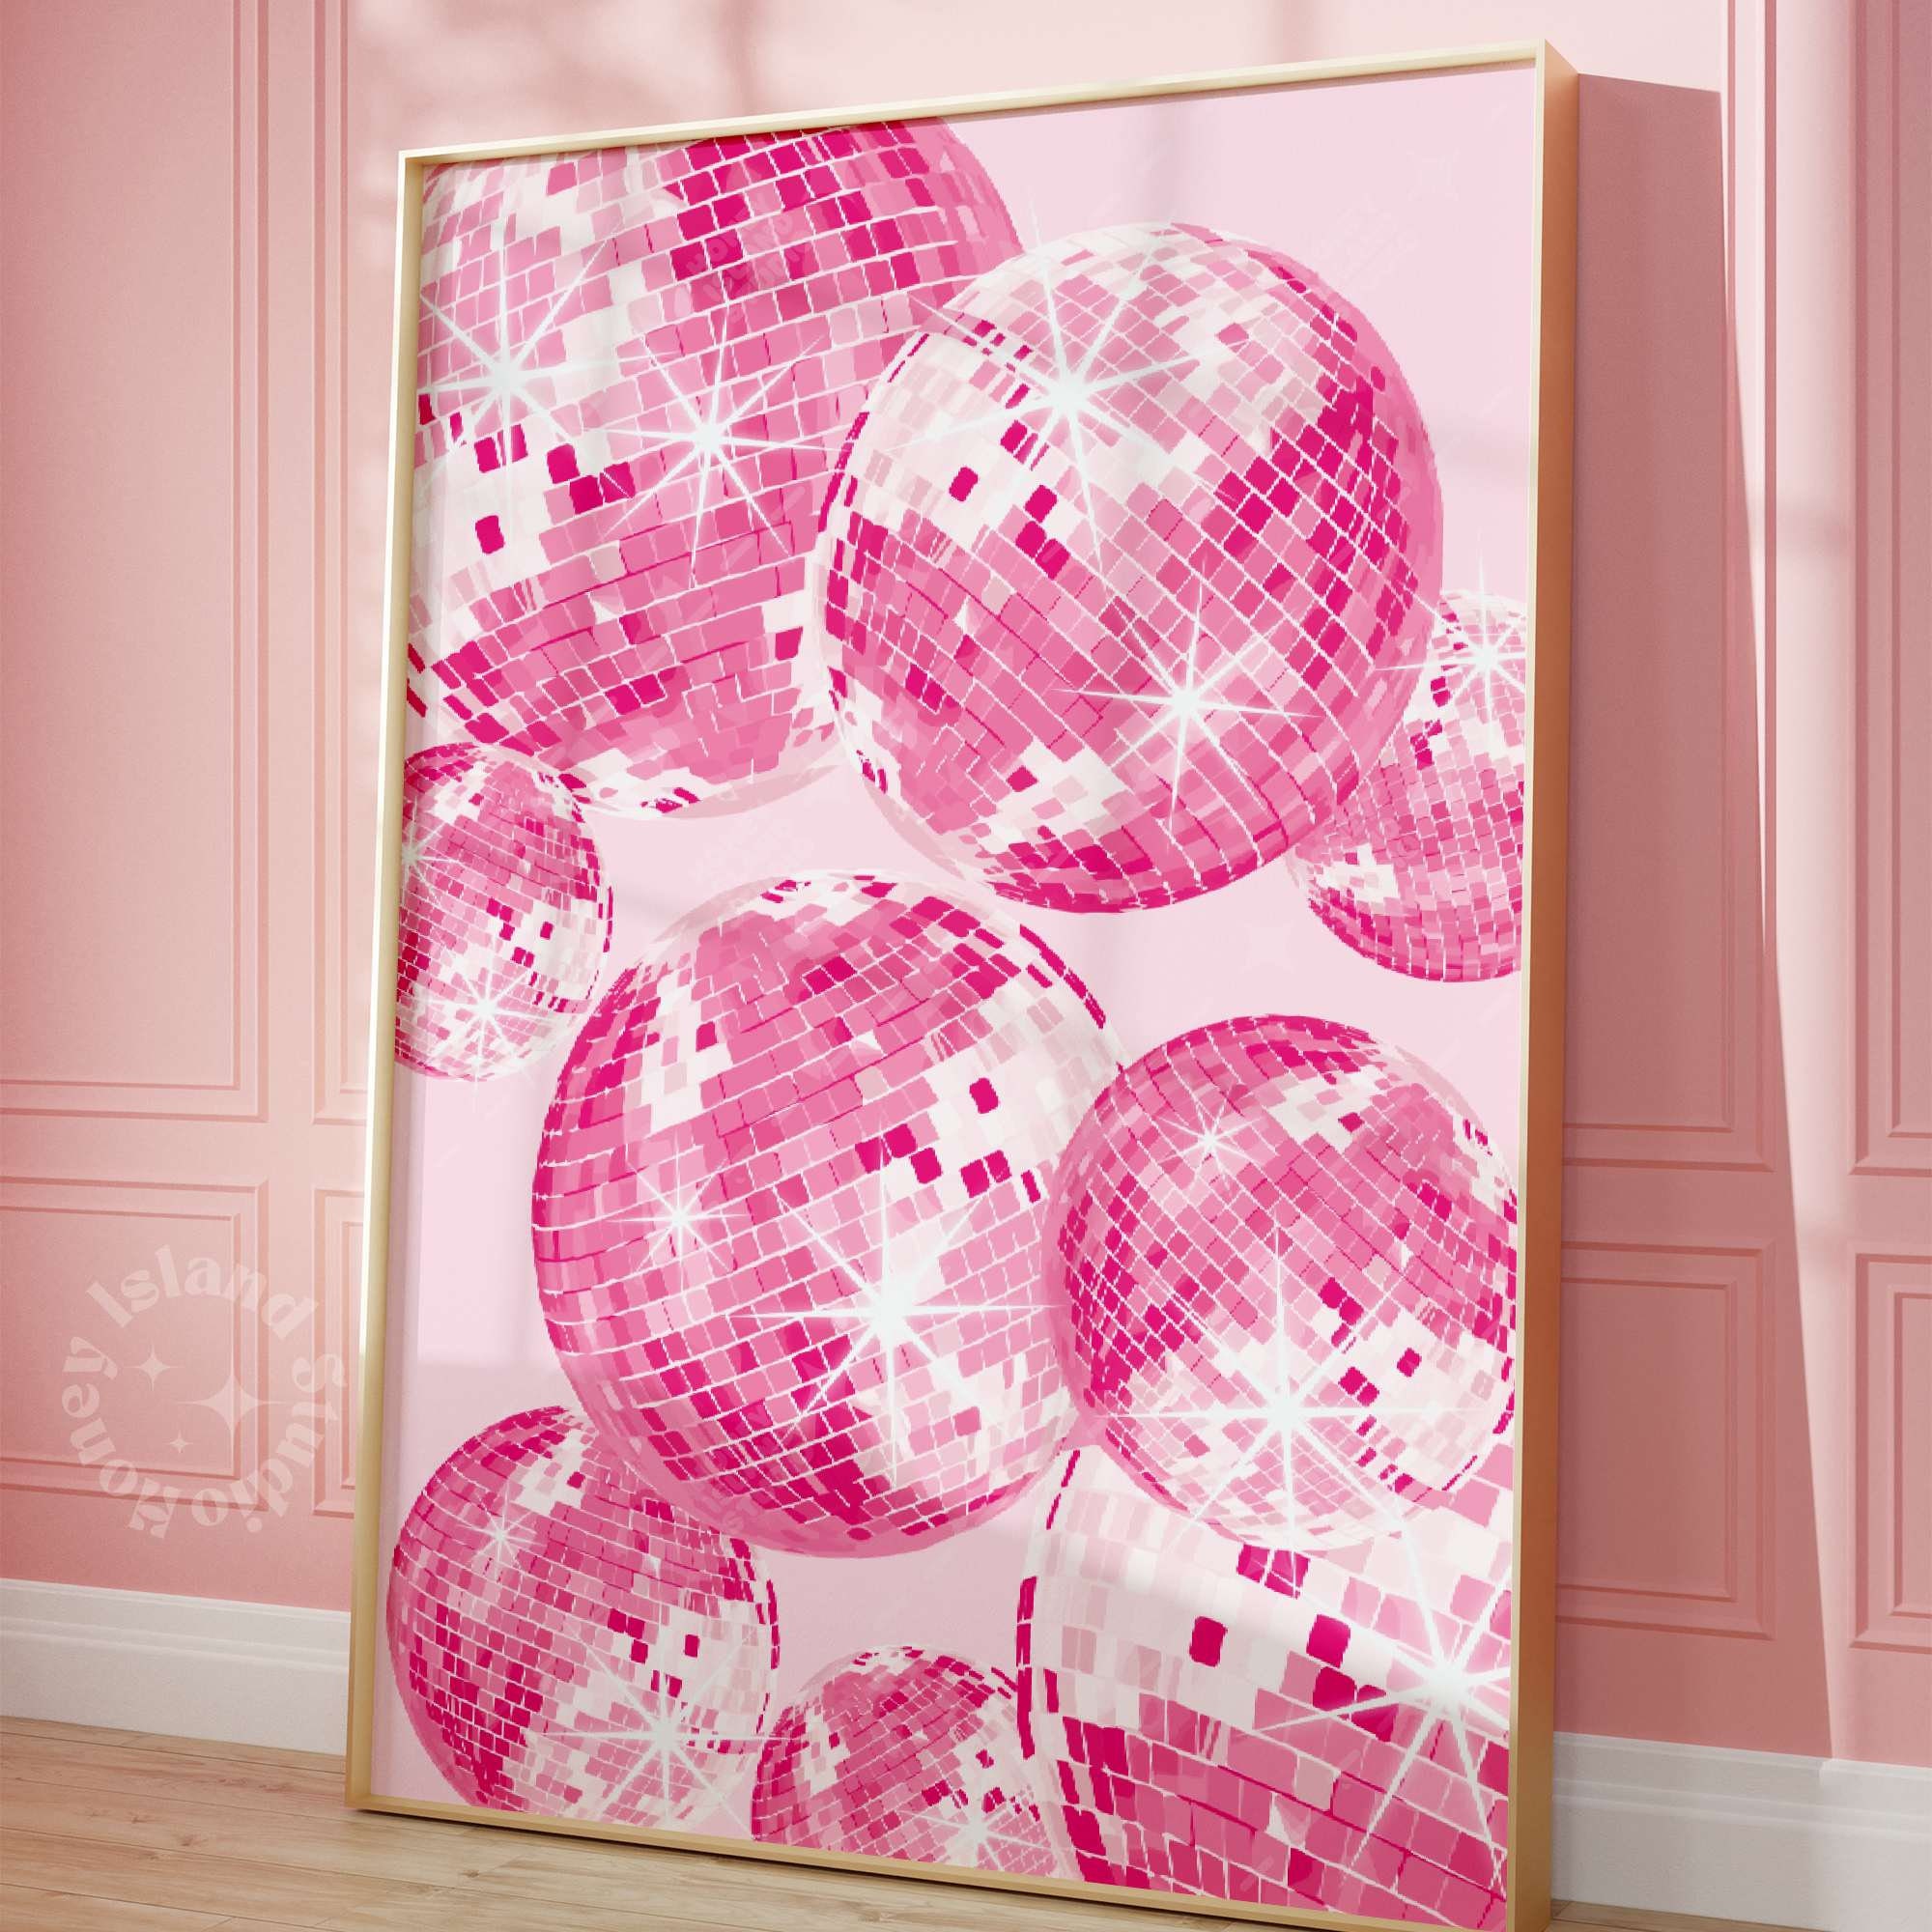 Disco ball- dance the night away- Orange and pink- pink background Art Print